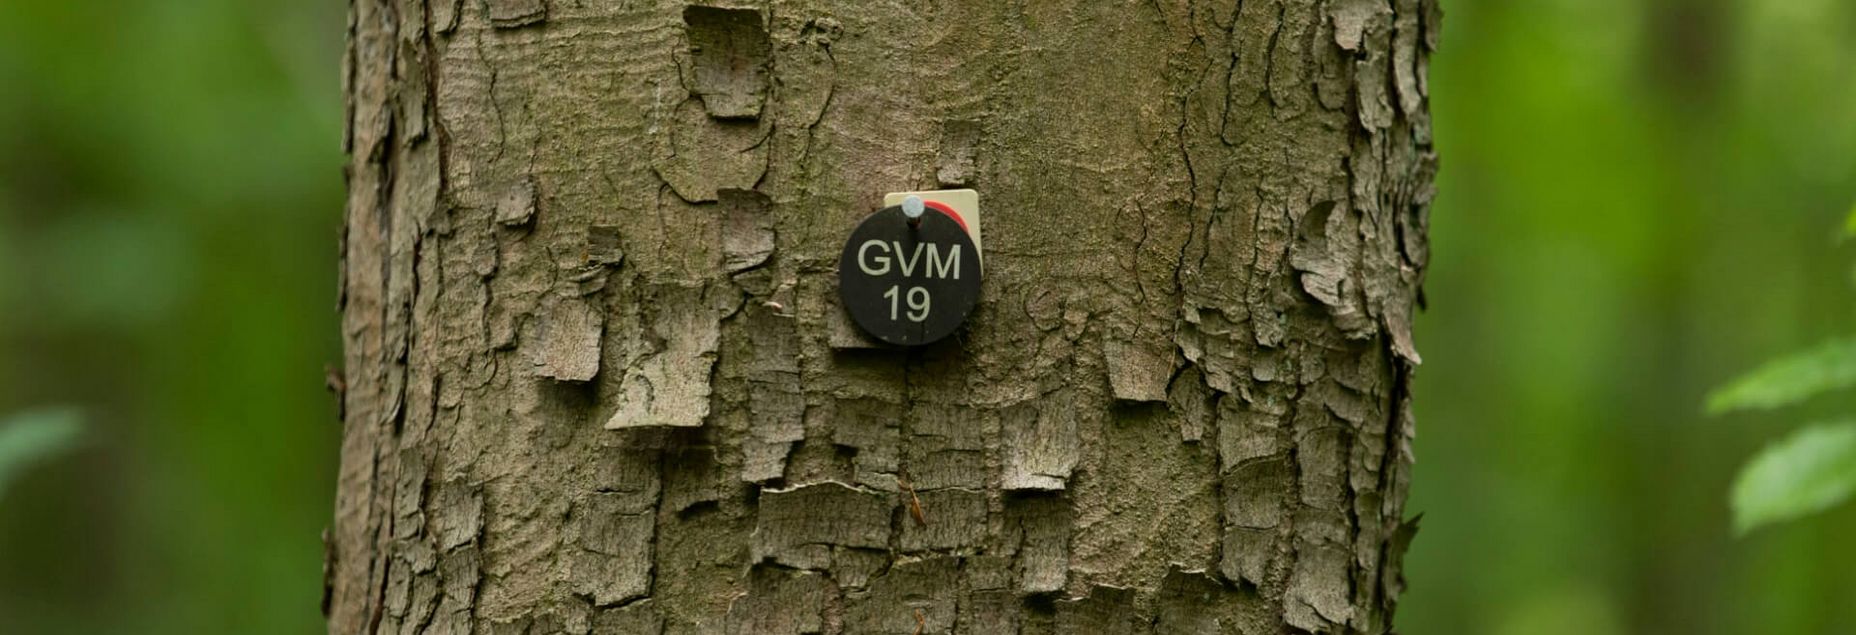 Baum GVM 19 - Plakette